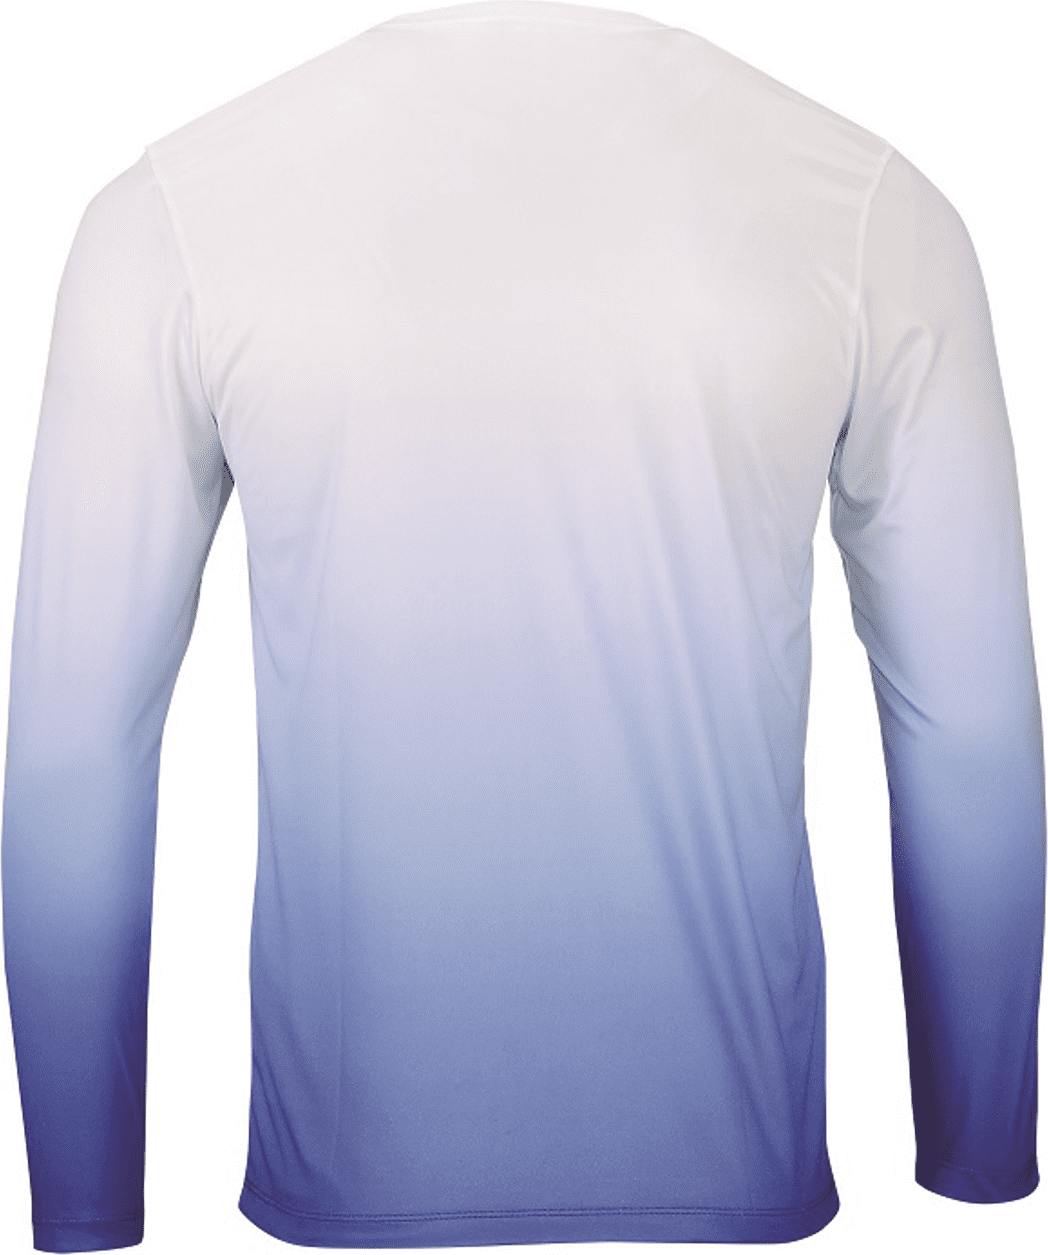 Paragon 233 Maui Performance Long Sleeve T-Shirt - Royal - HIT a Double